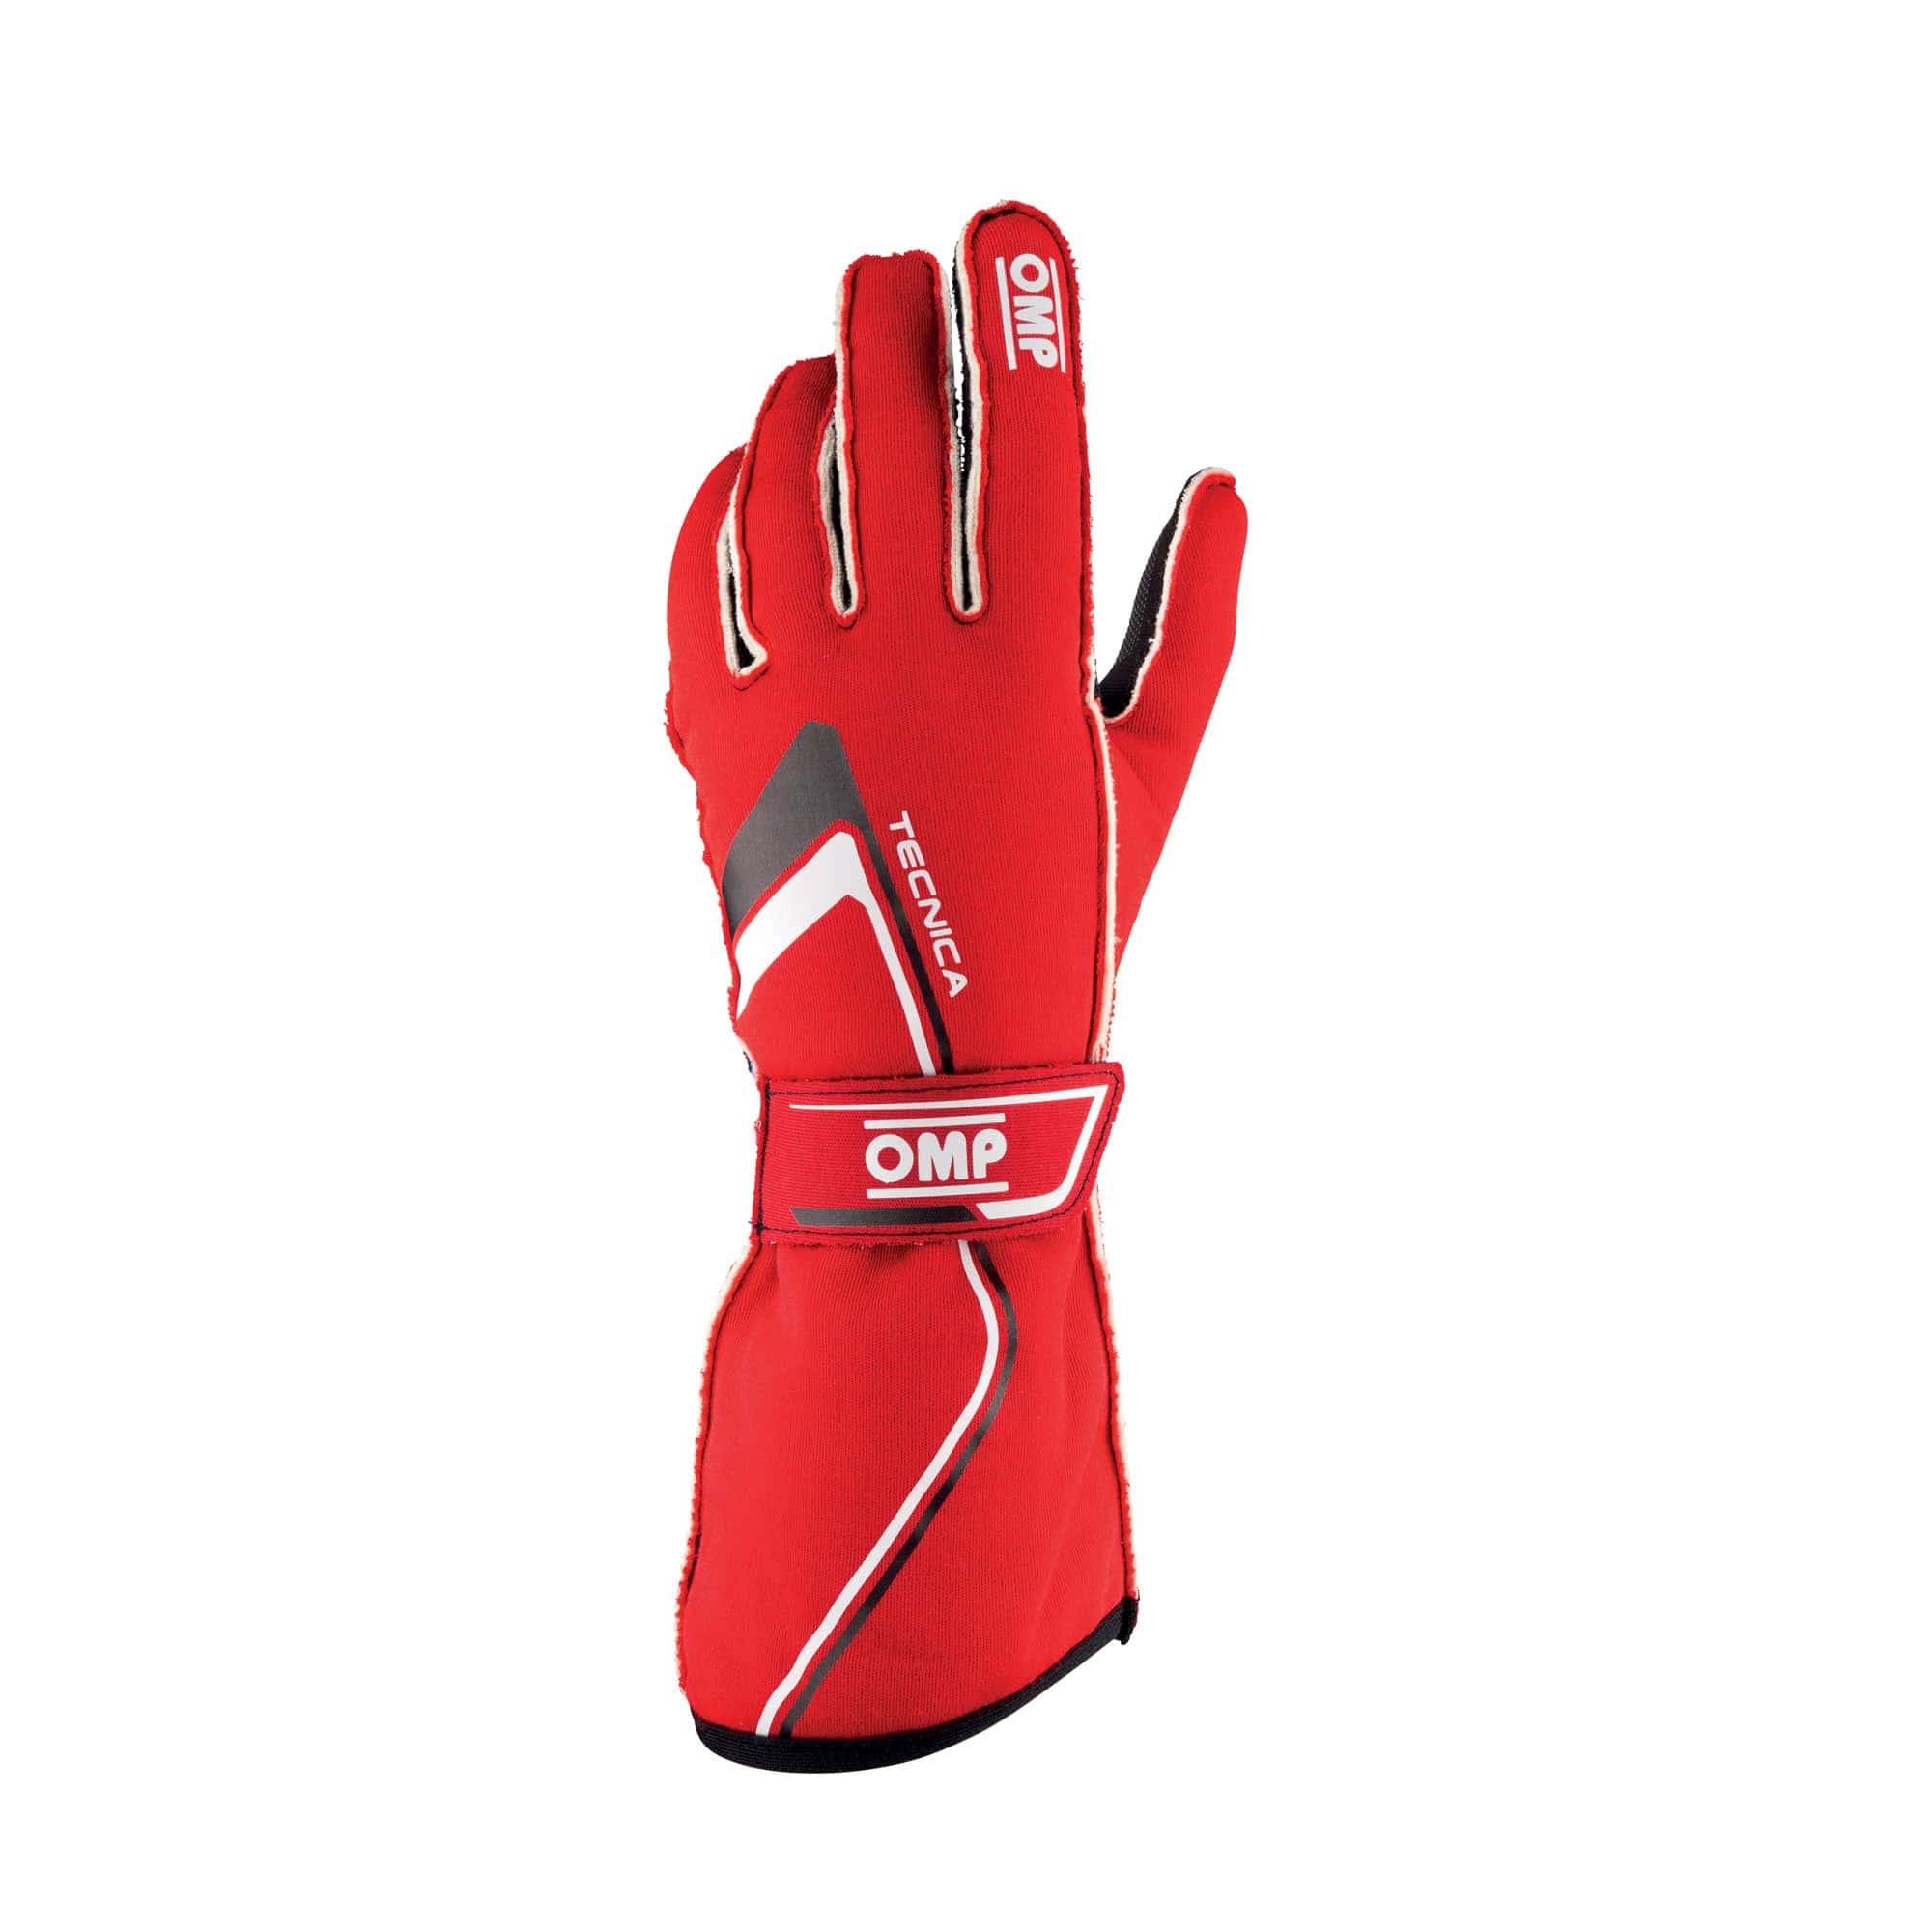 Guanti-Tecnica-Gloves-Omp-Rosso-IB-772-R